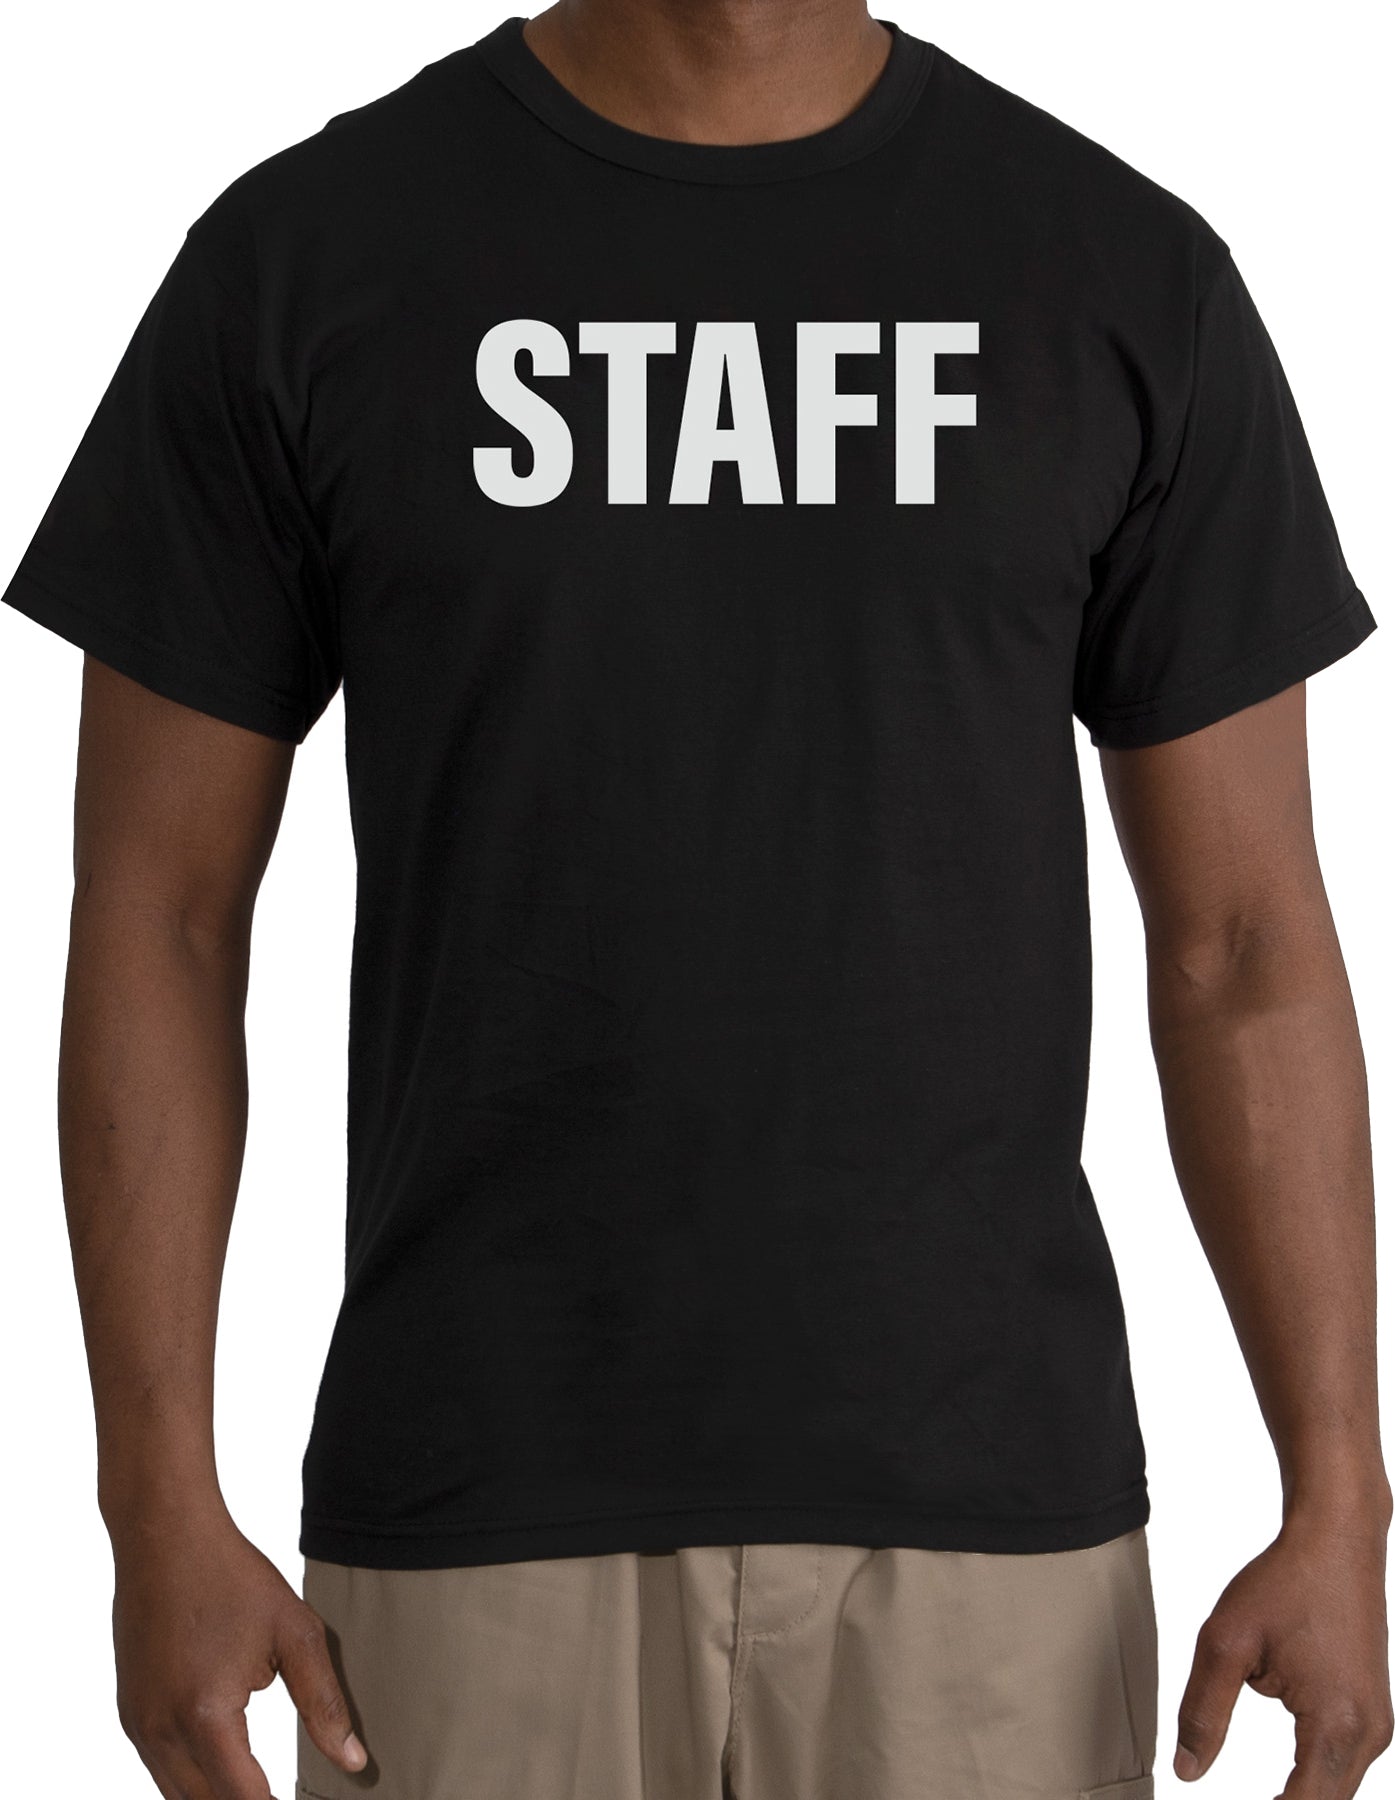 Black 2-Sided Staff T-Shirt Comfortable Short Sleeve Tee Shirt